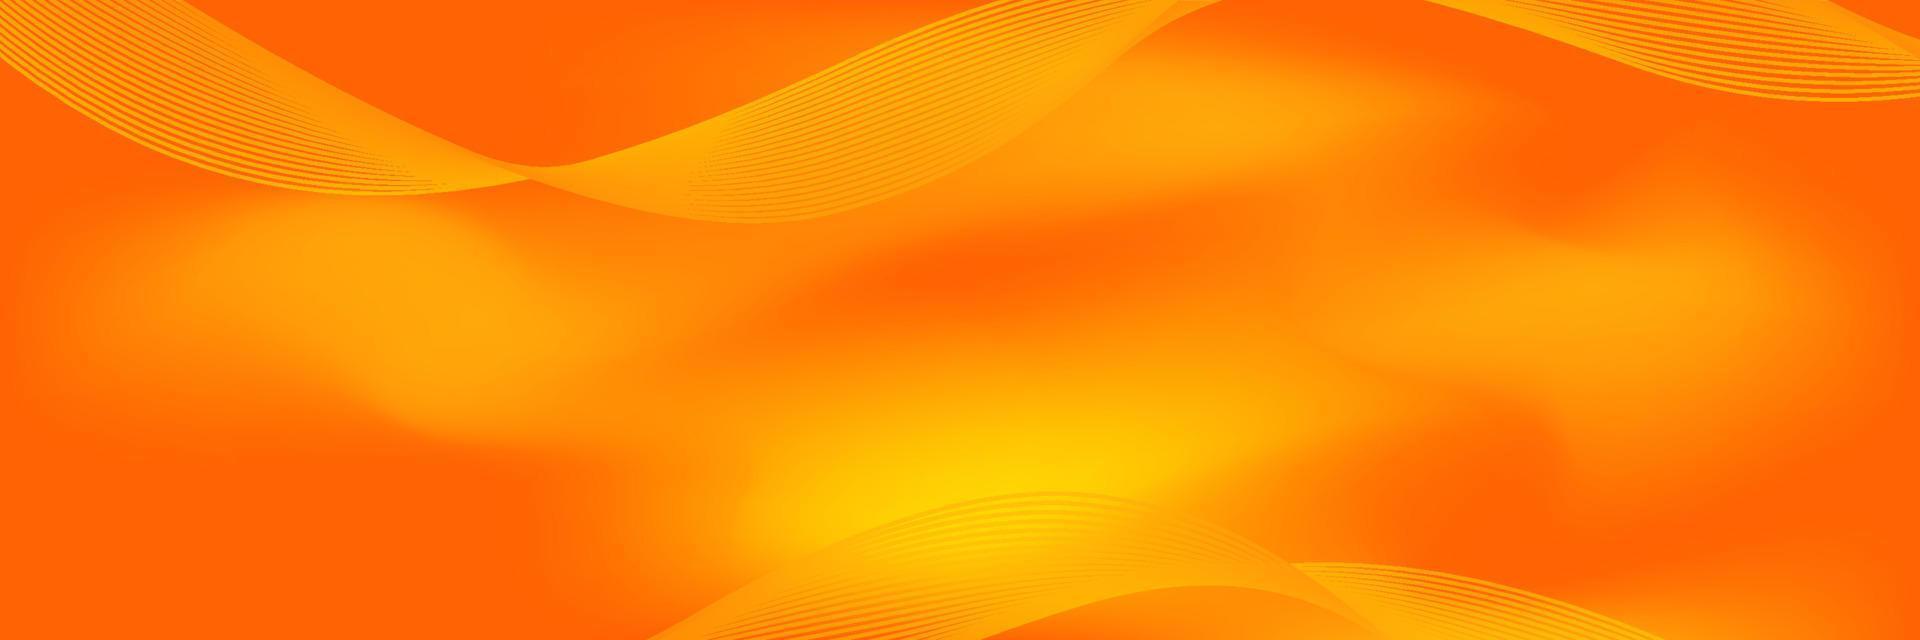 abstrato laranja ondas bandeira fundo vetor